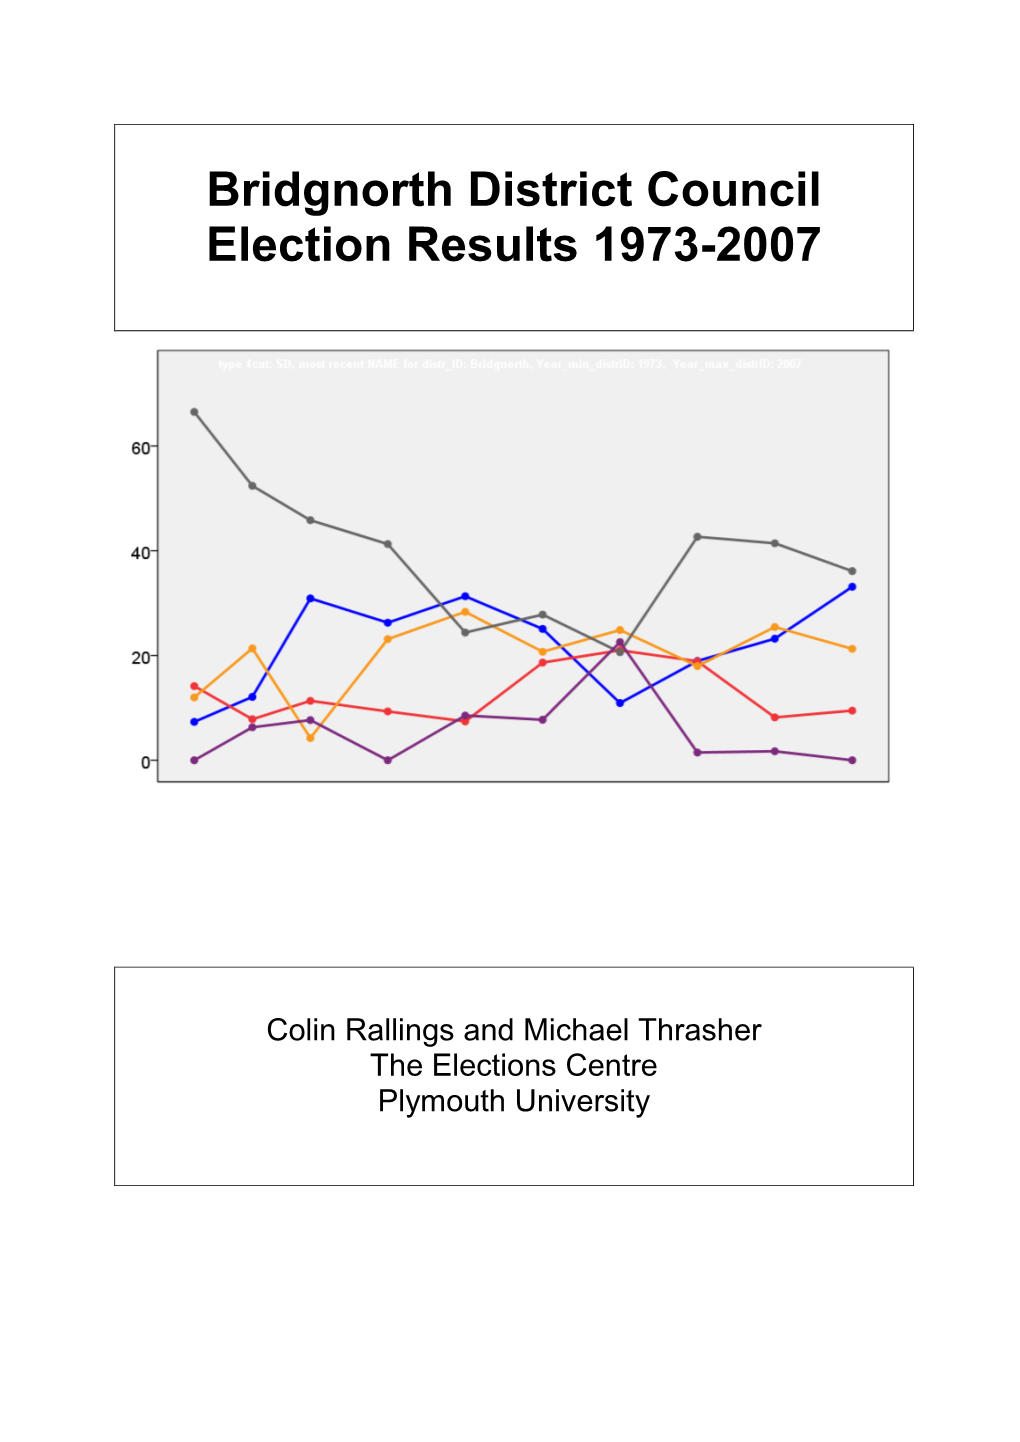 Bridgnorth District Council Election Results 1973-2007